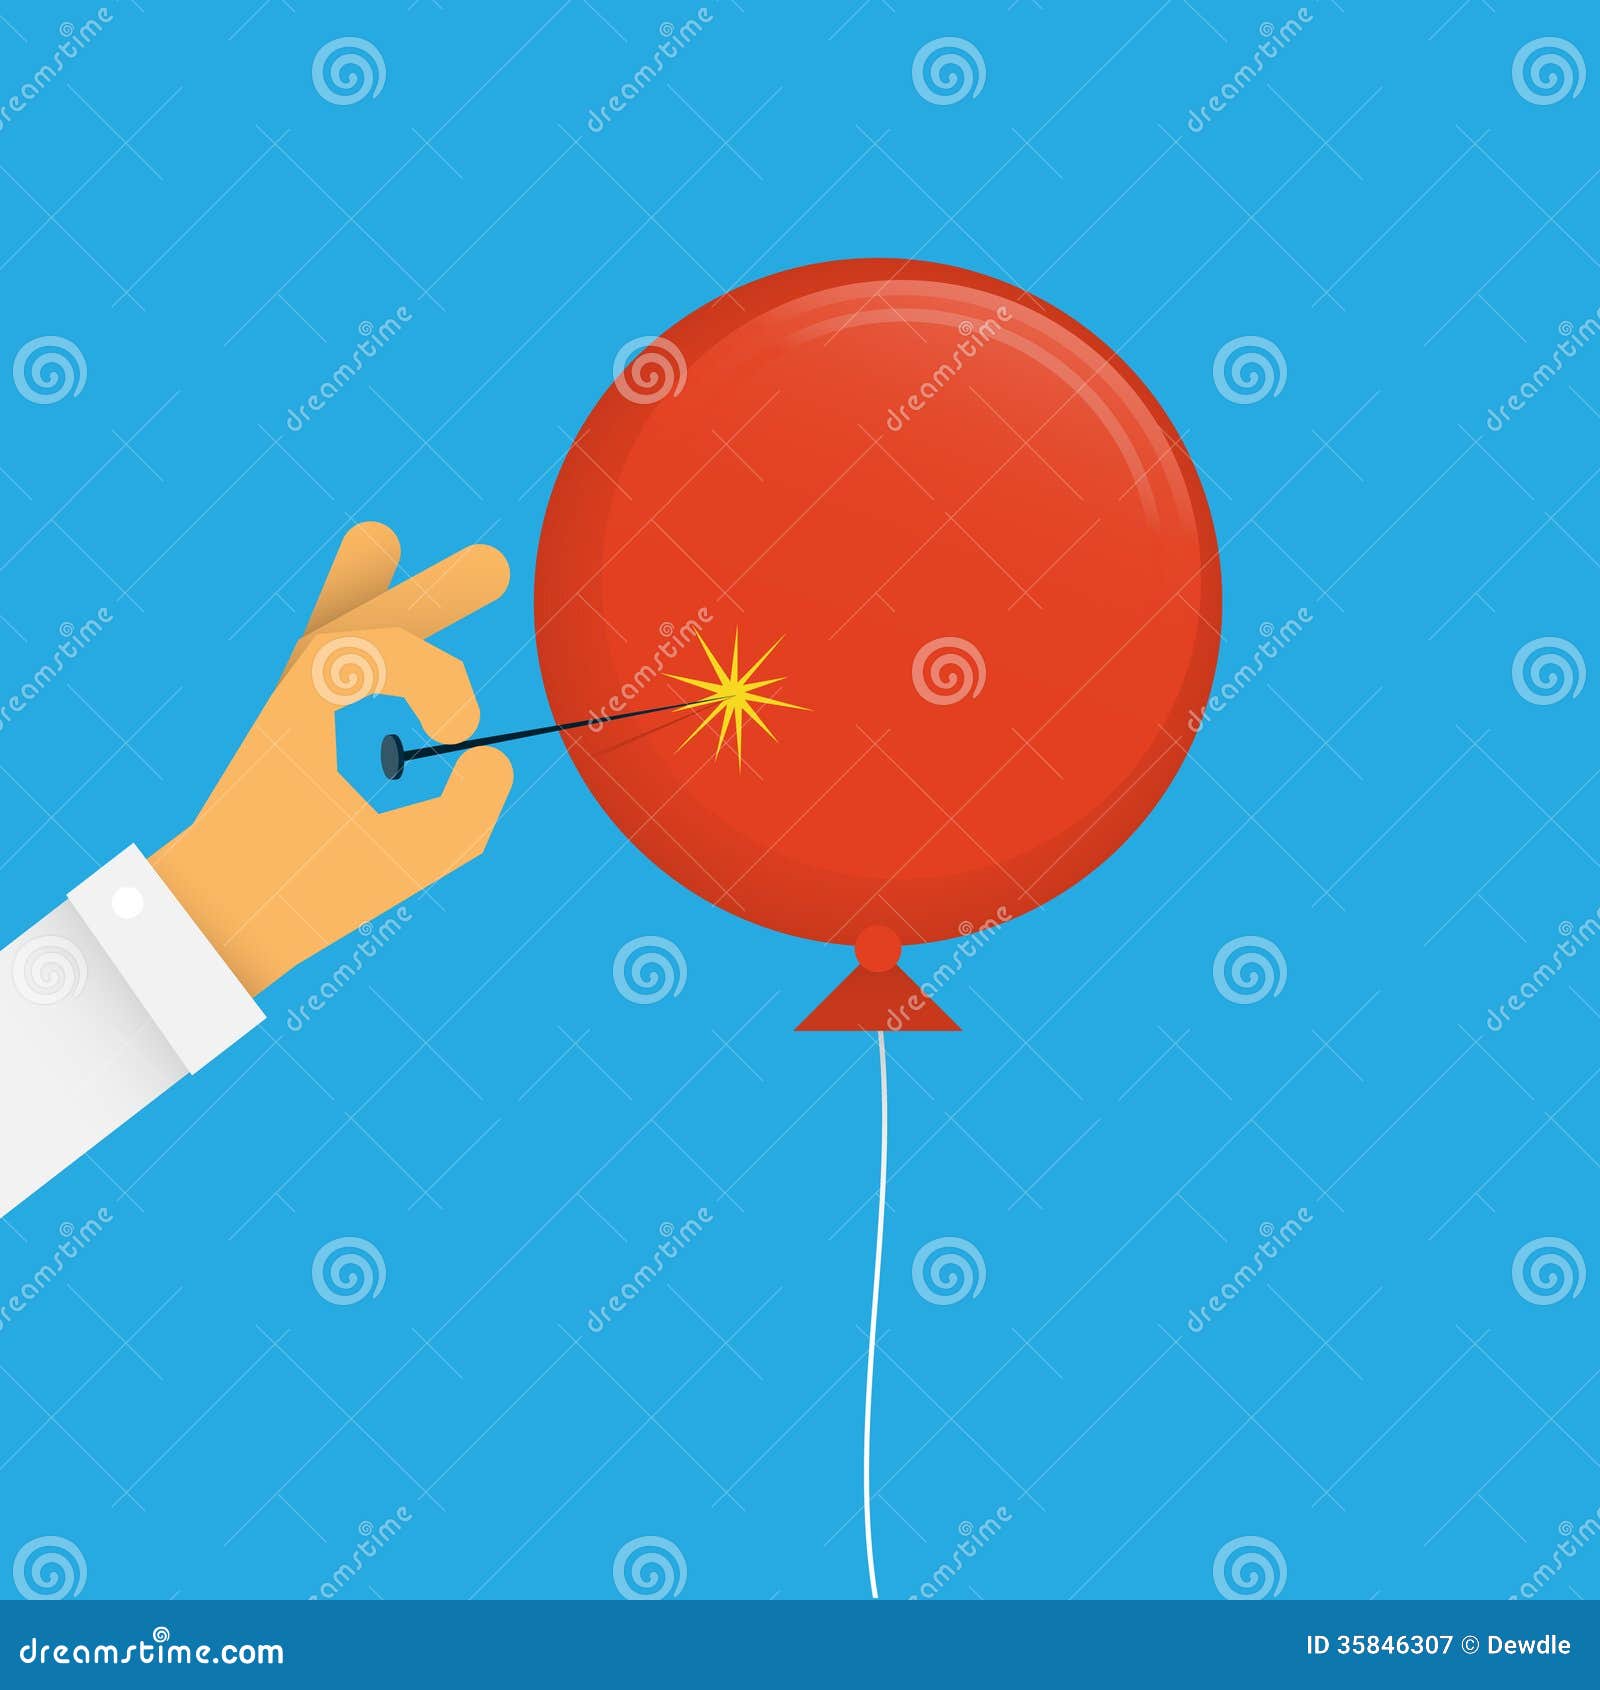 free clip art balloon popping - photo #3